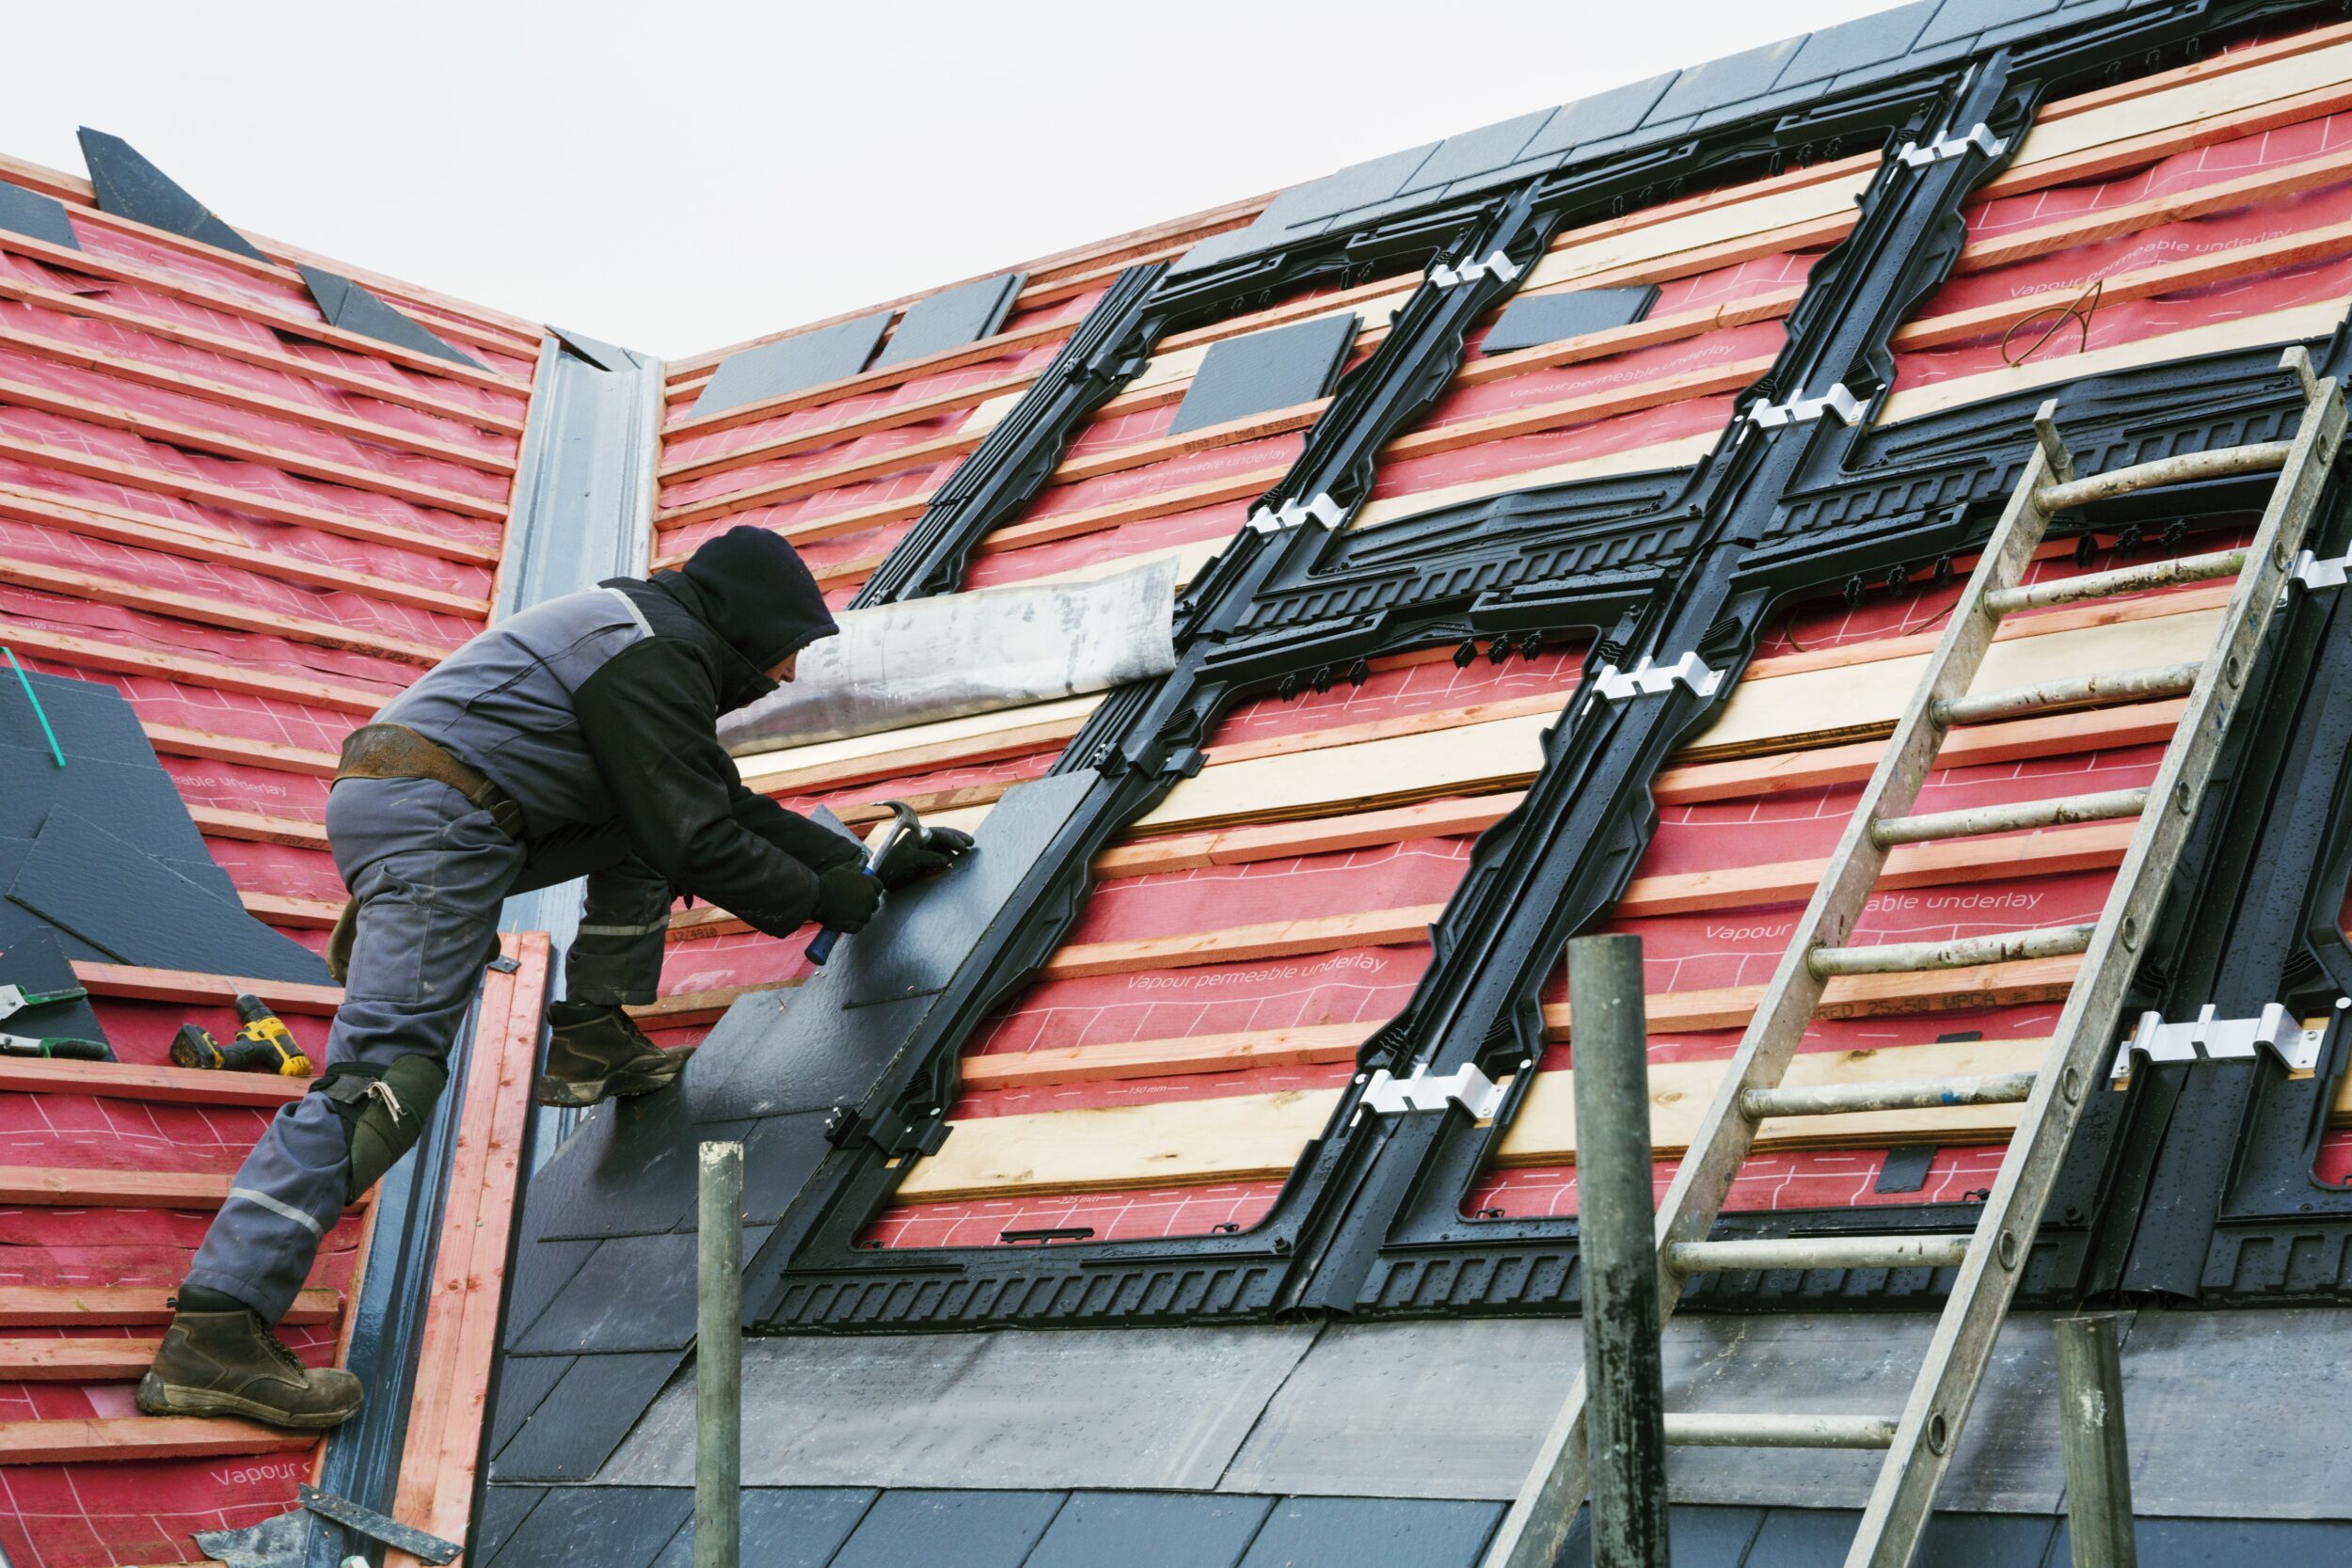 A roofer placing tiles